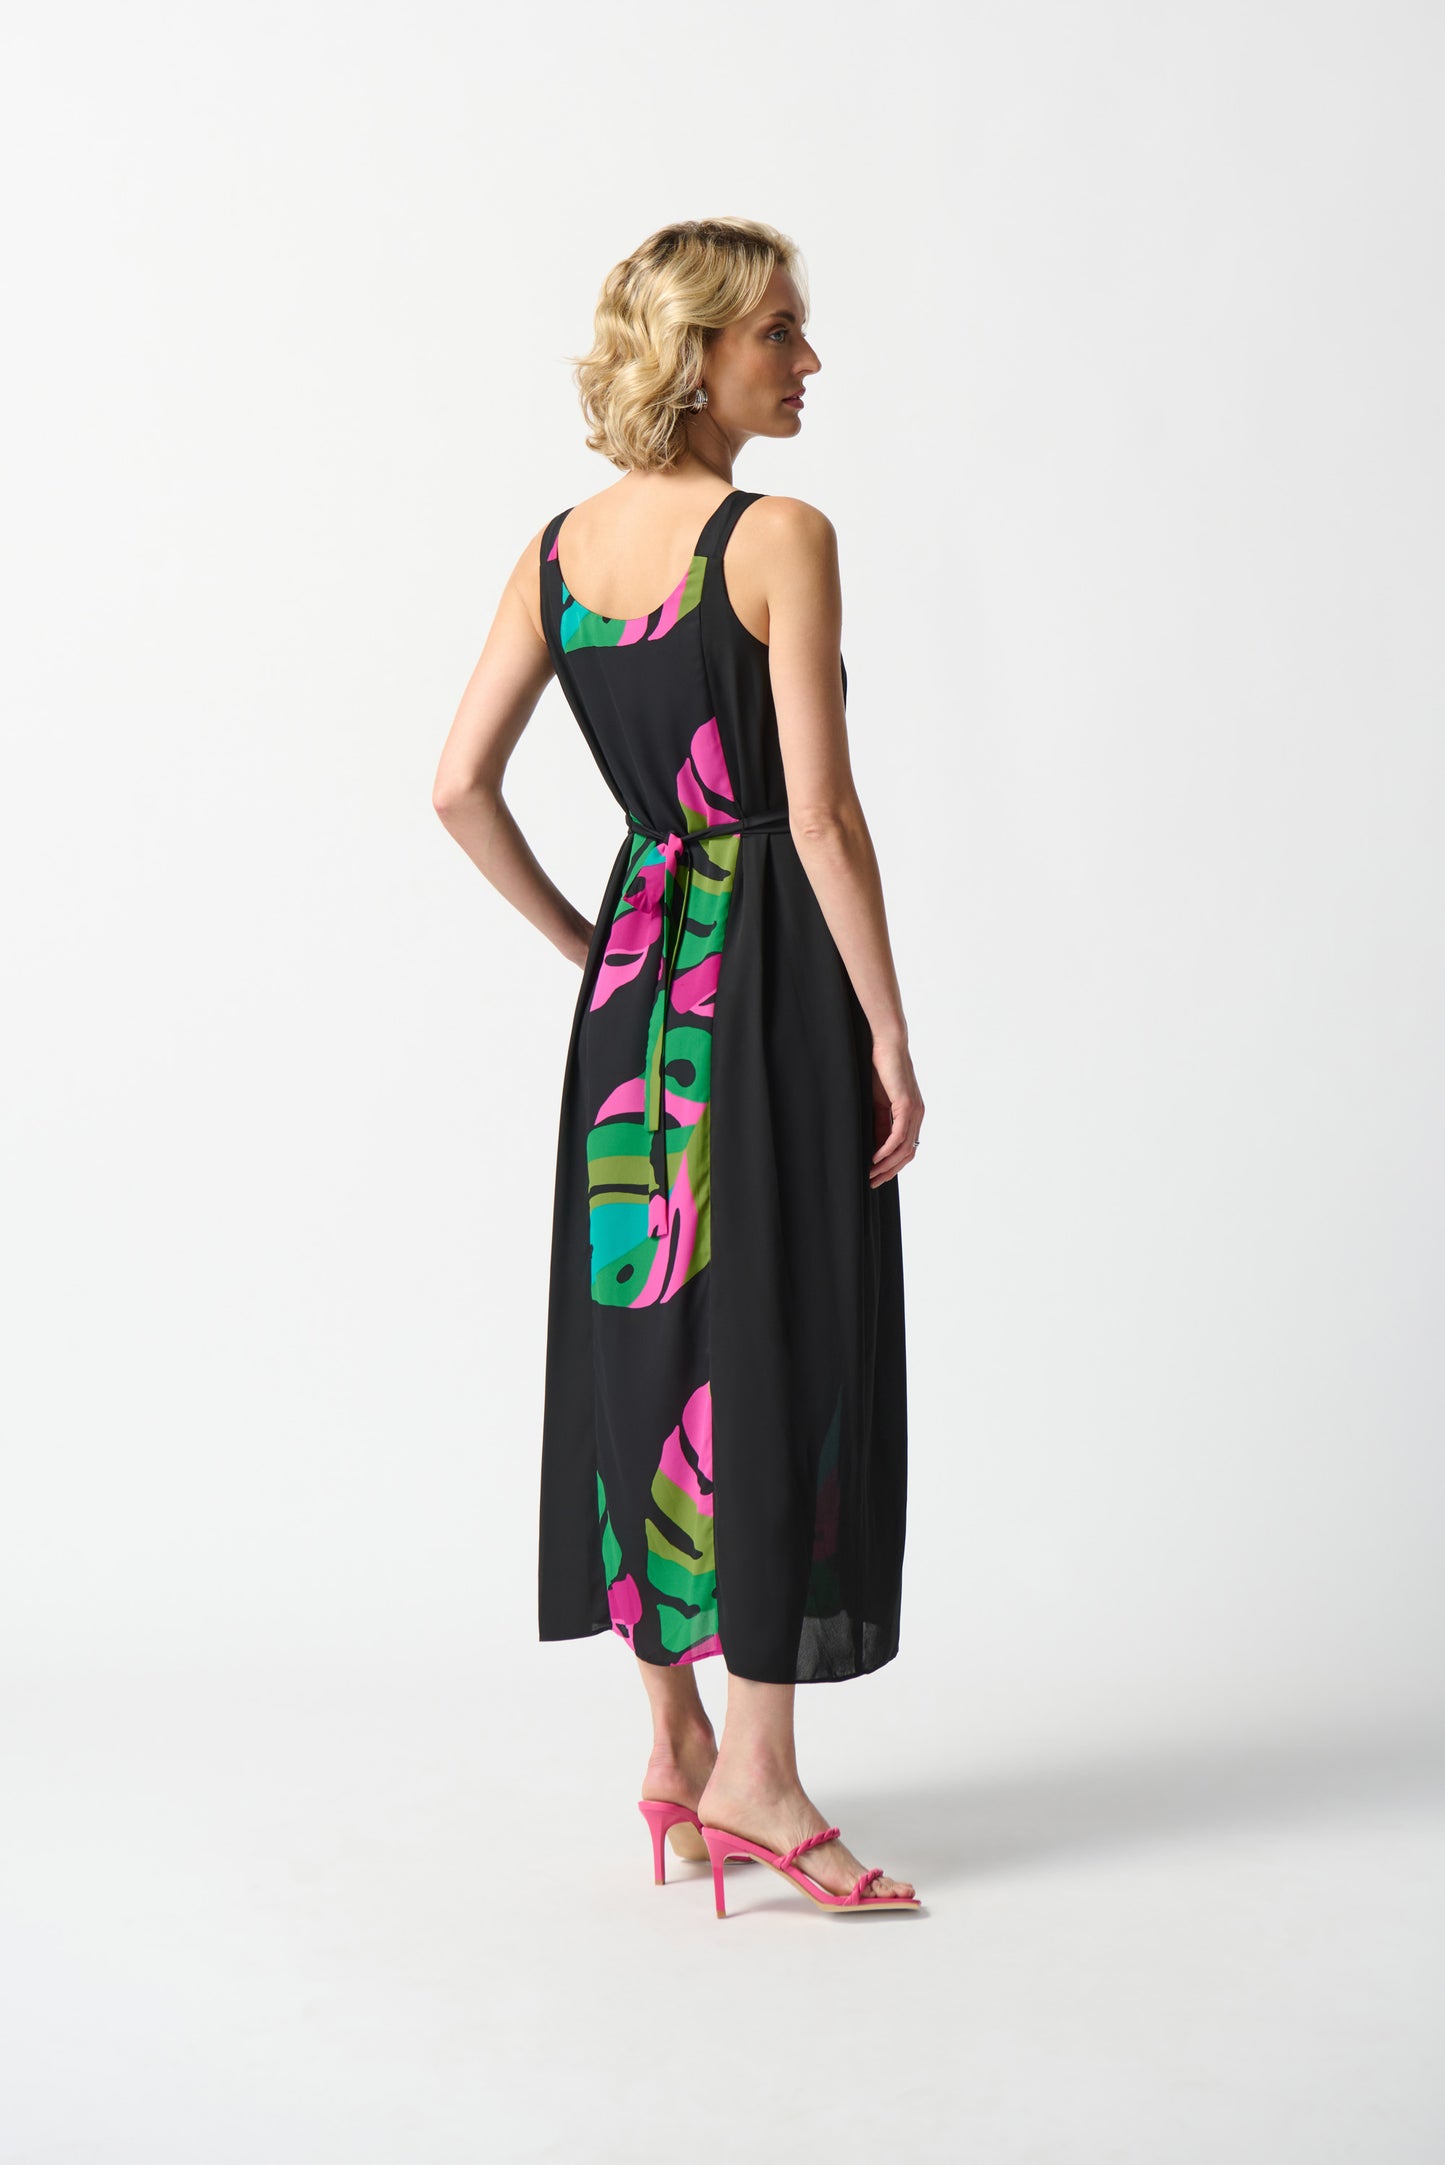 Georgette Tropical Print Dress
242163